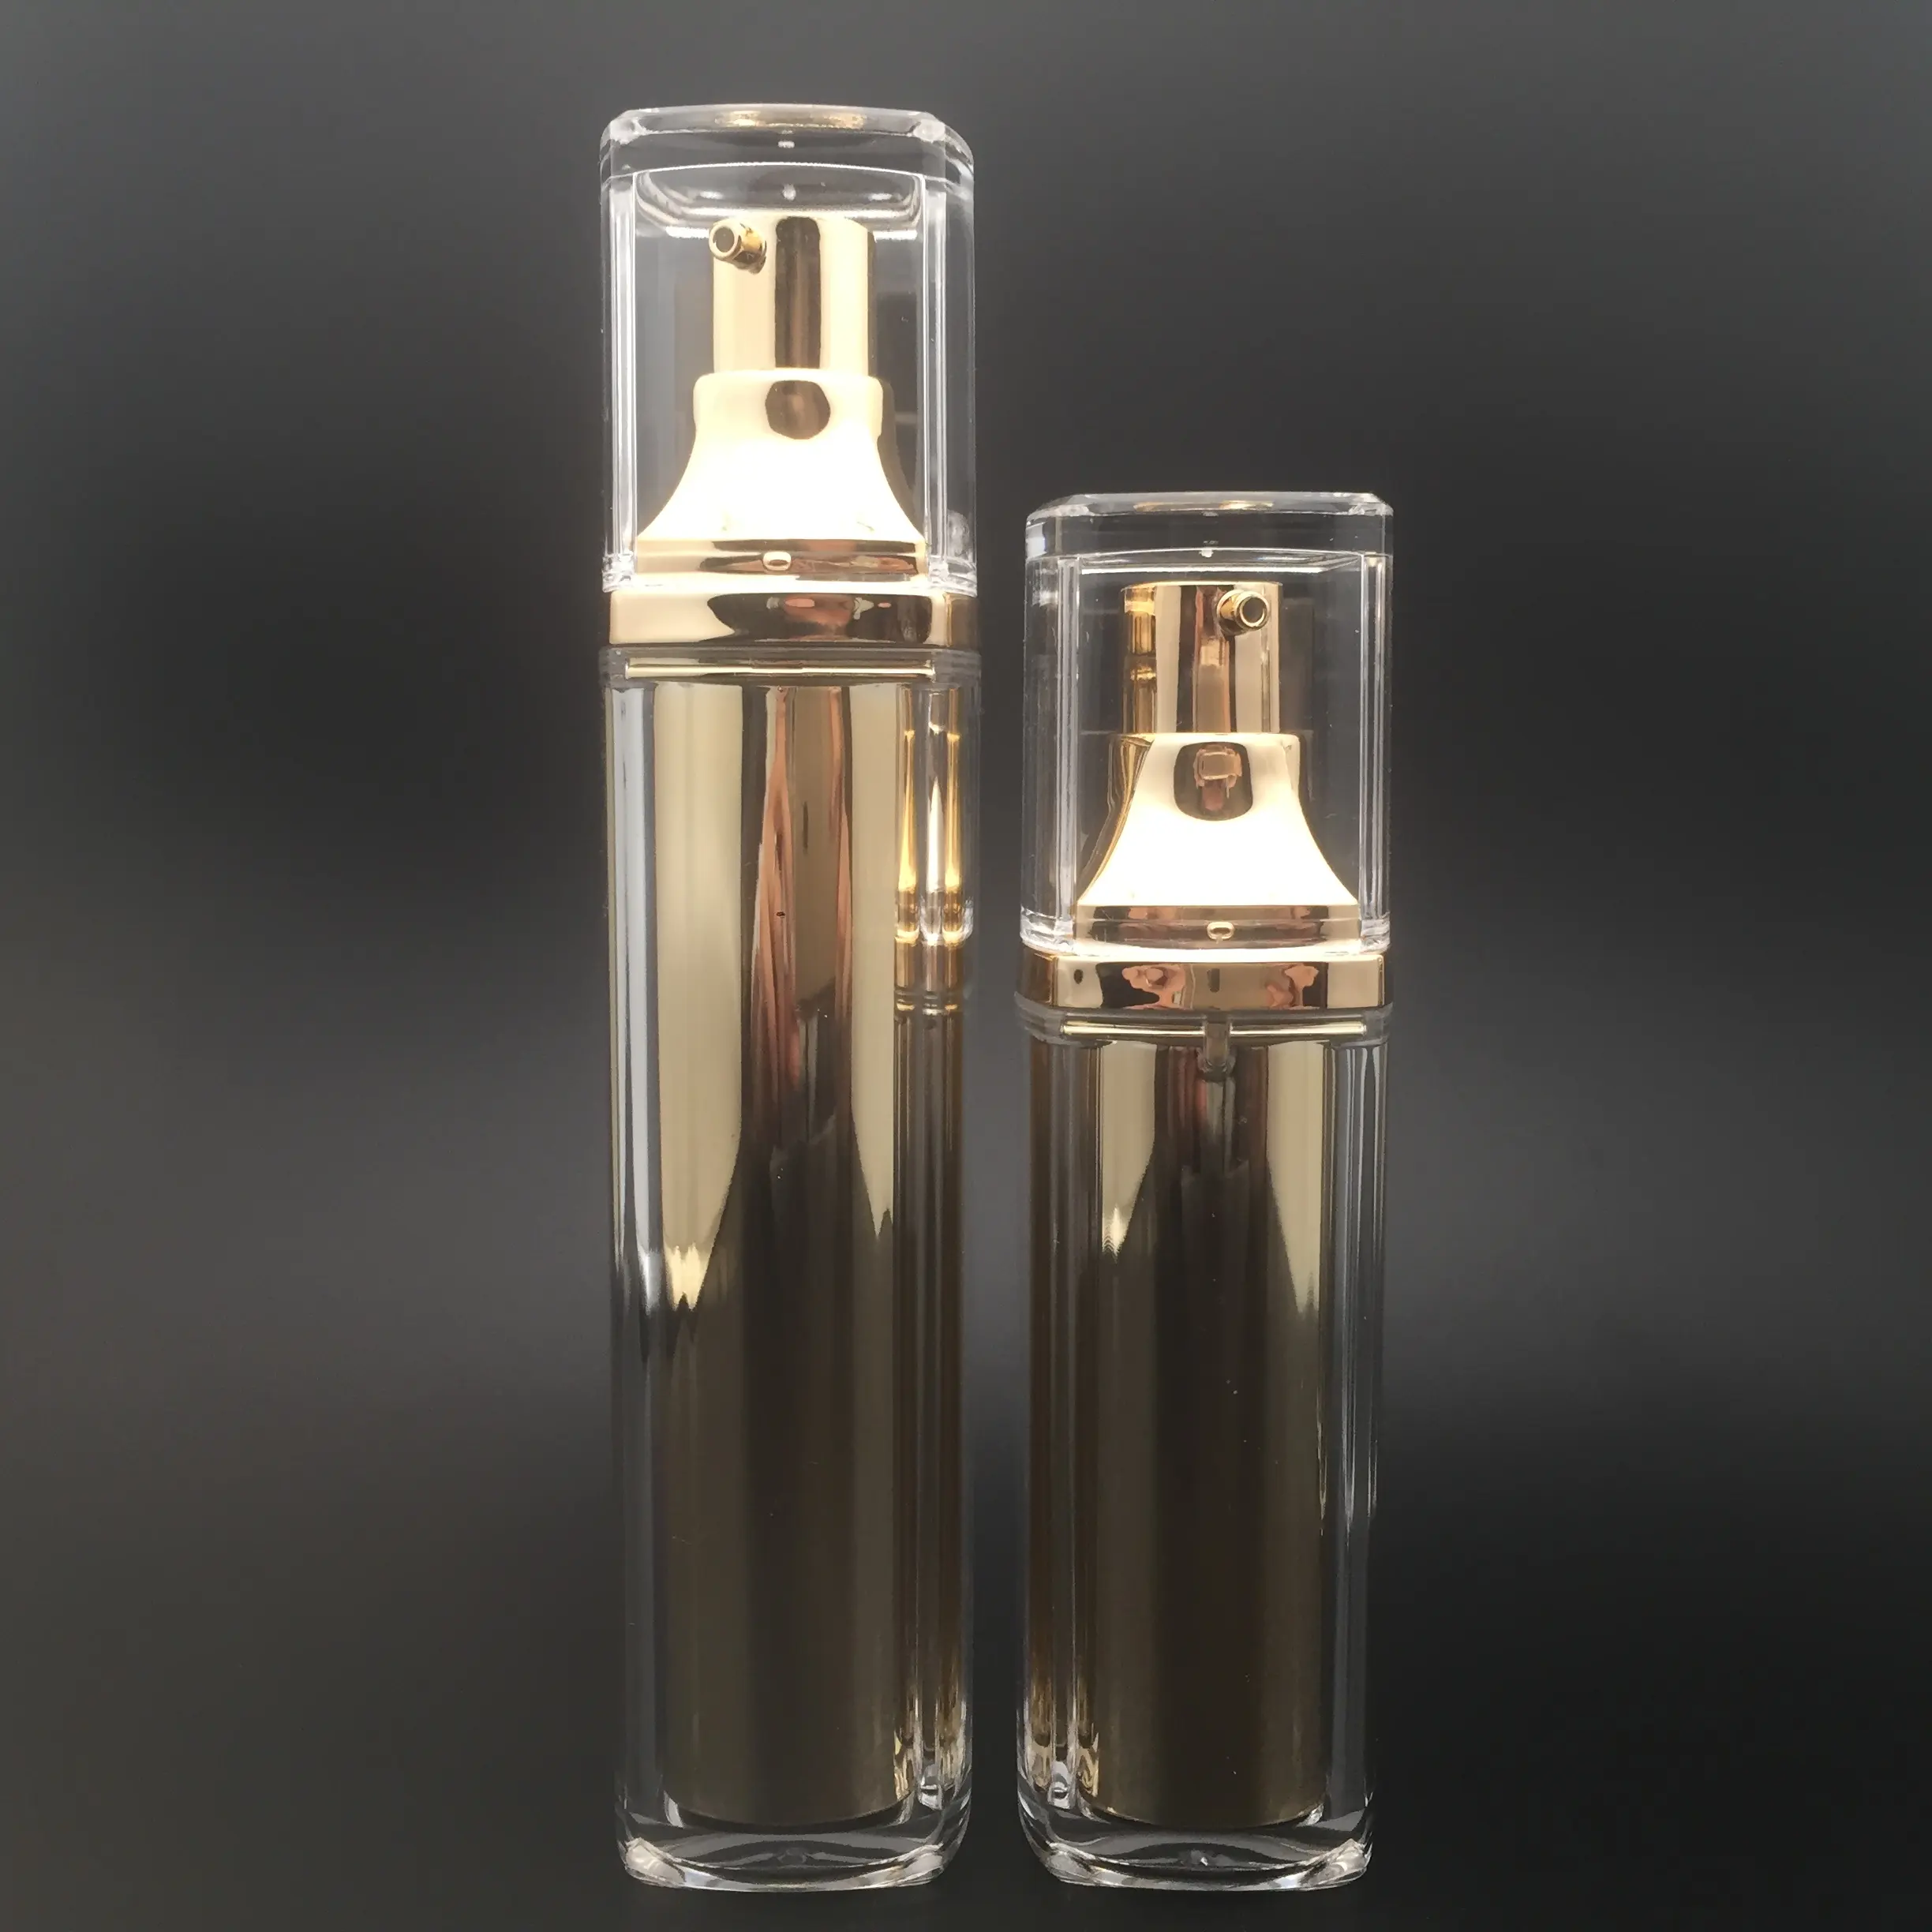 UV coated gold acryl airless serum fles voor rechthoek